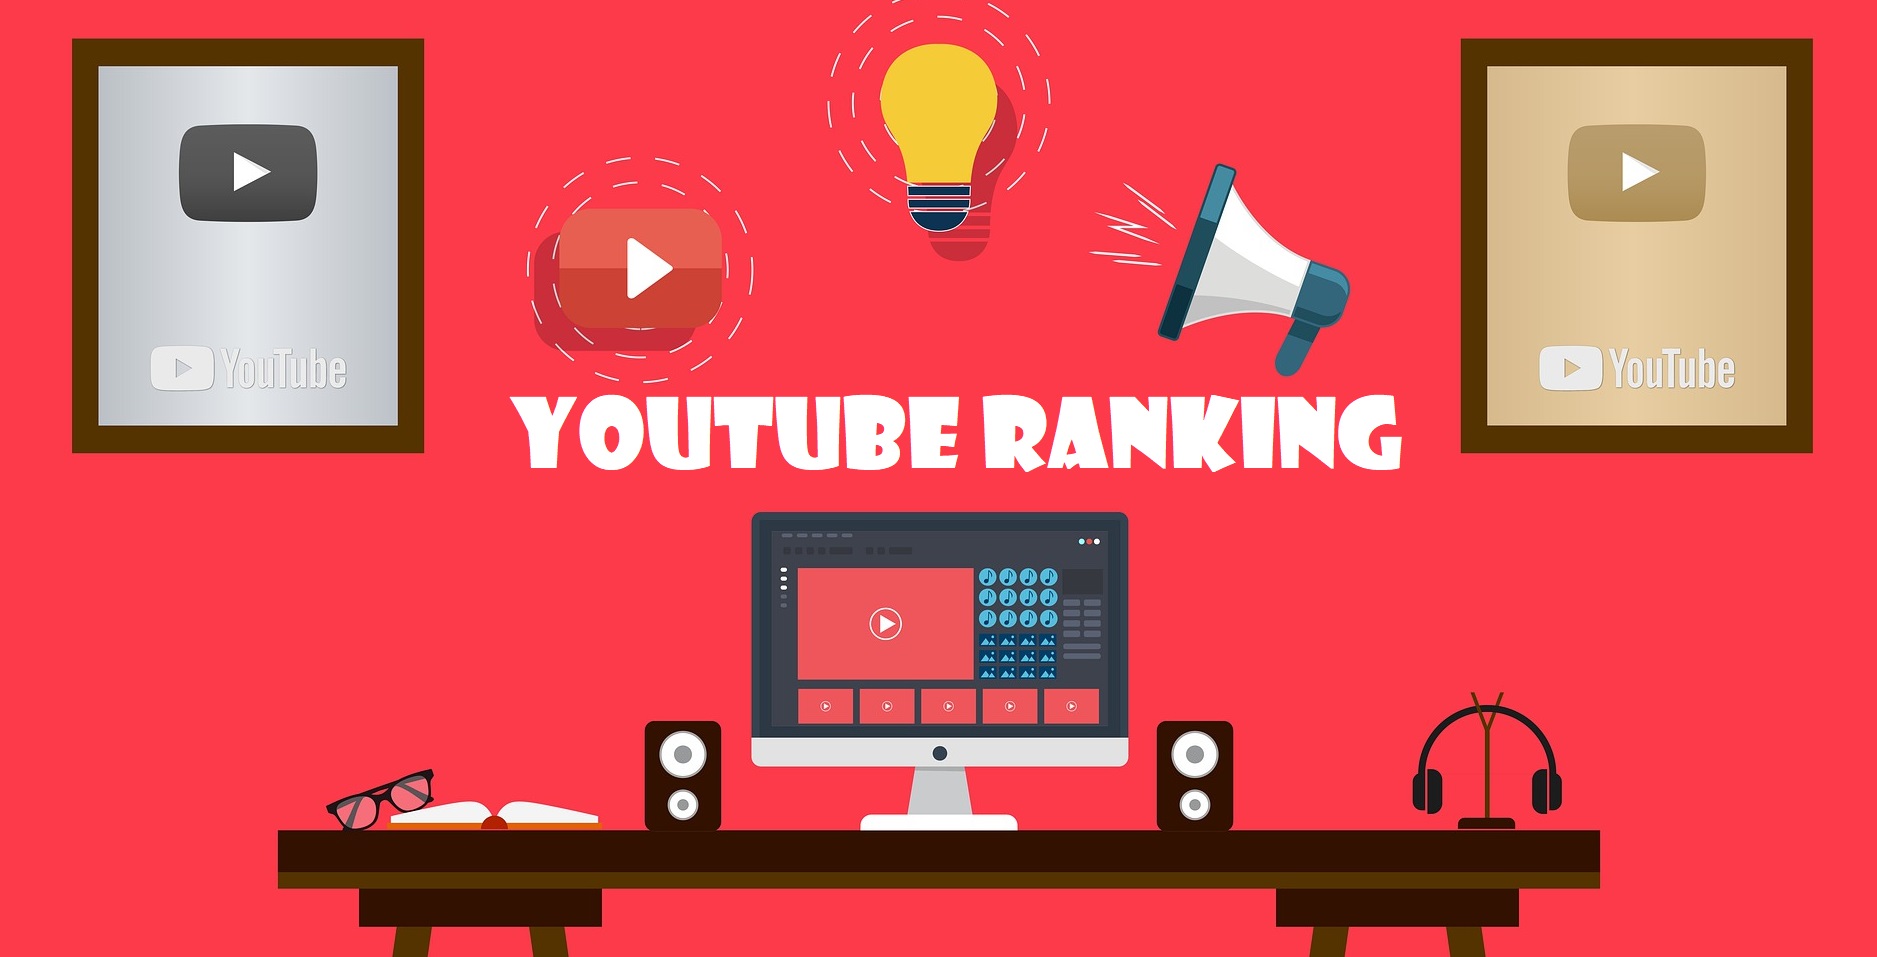 Factors in YouTube Ranking